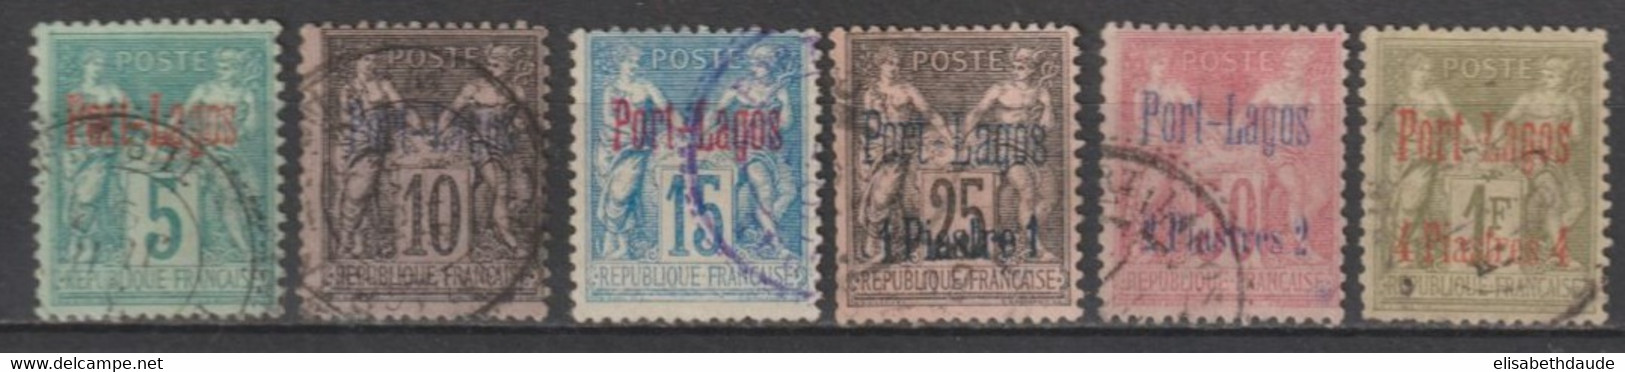 PORT LAGOS - 1893 - SERIE COMPLETE YVERT N° 1/6 OBLITERES - COTE = 500 EUR. - Used Stamps